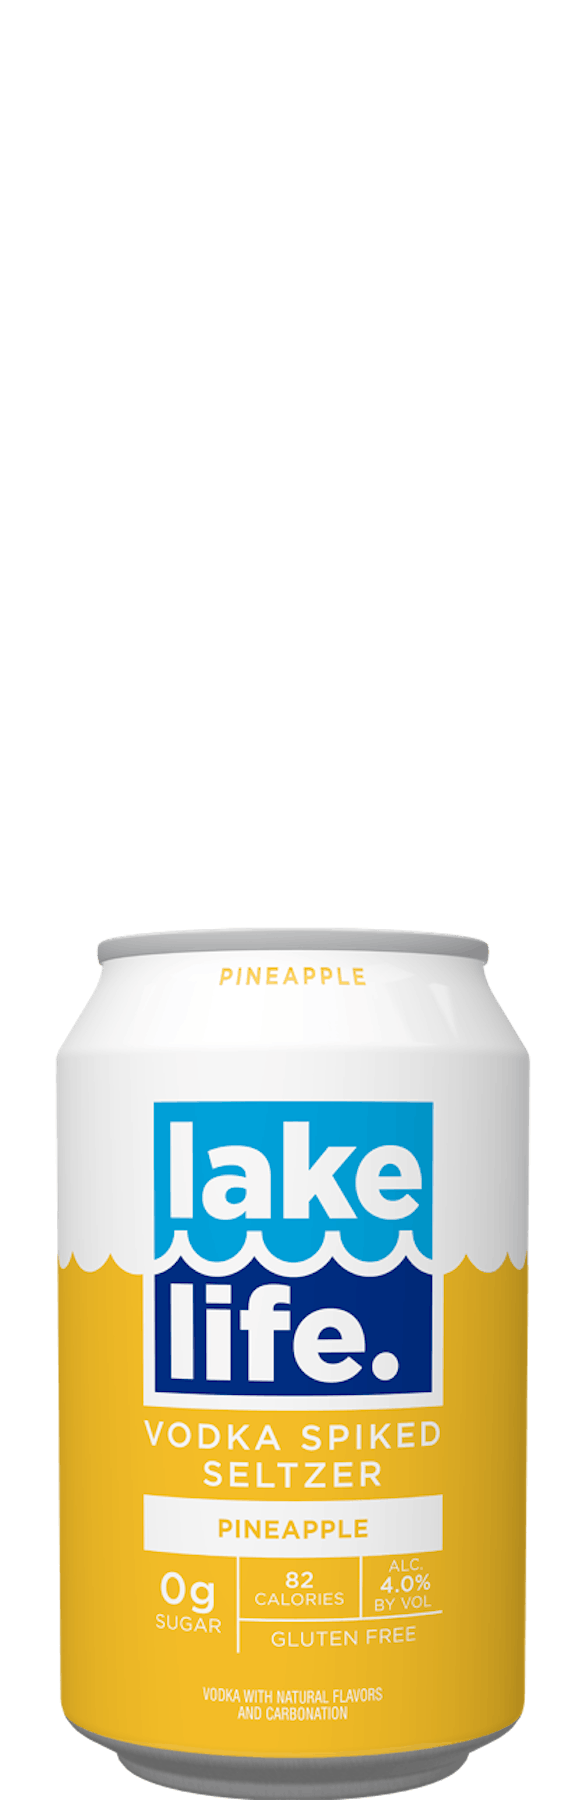 Lake Life Pineapple Seltzer